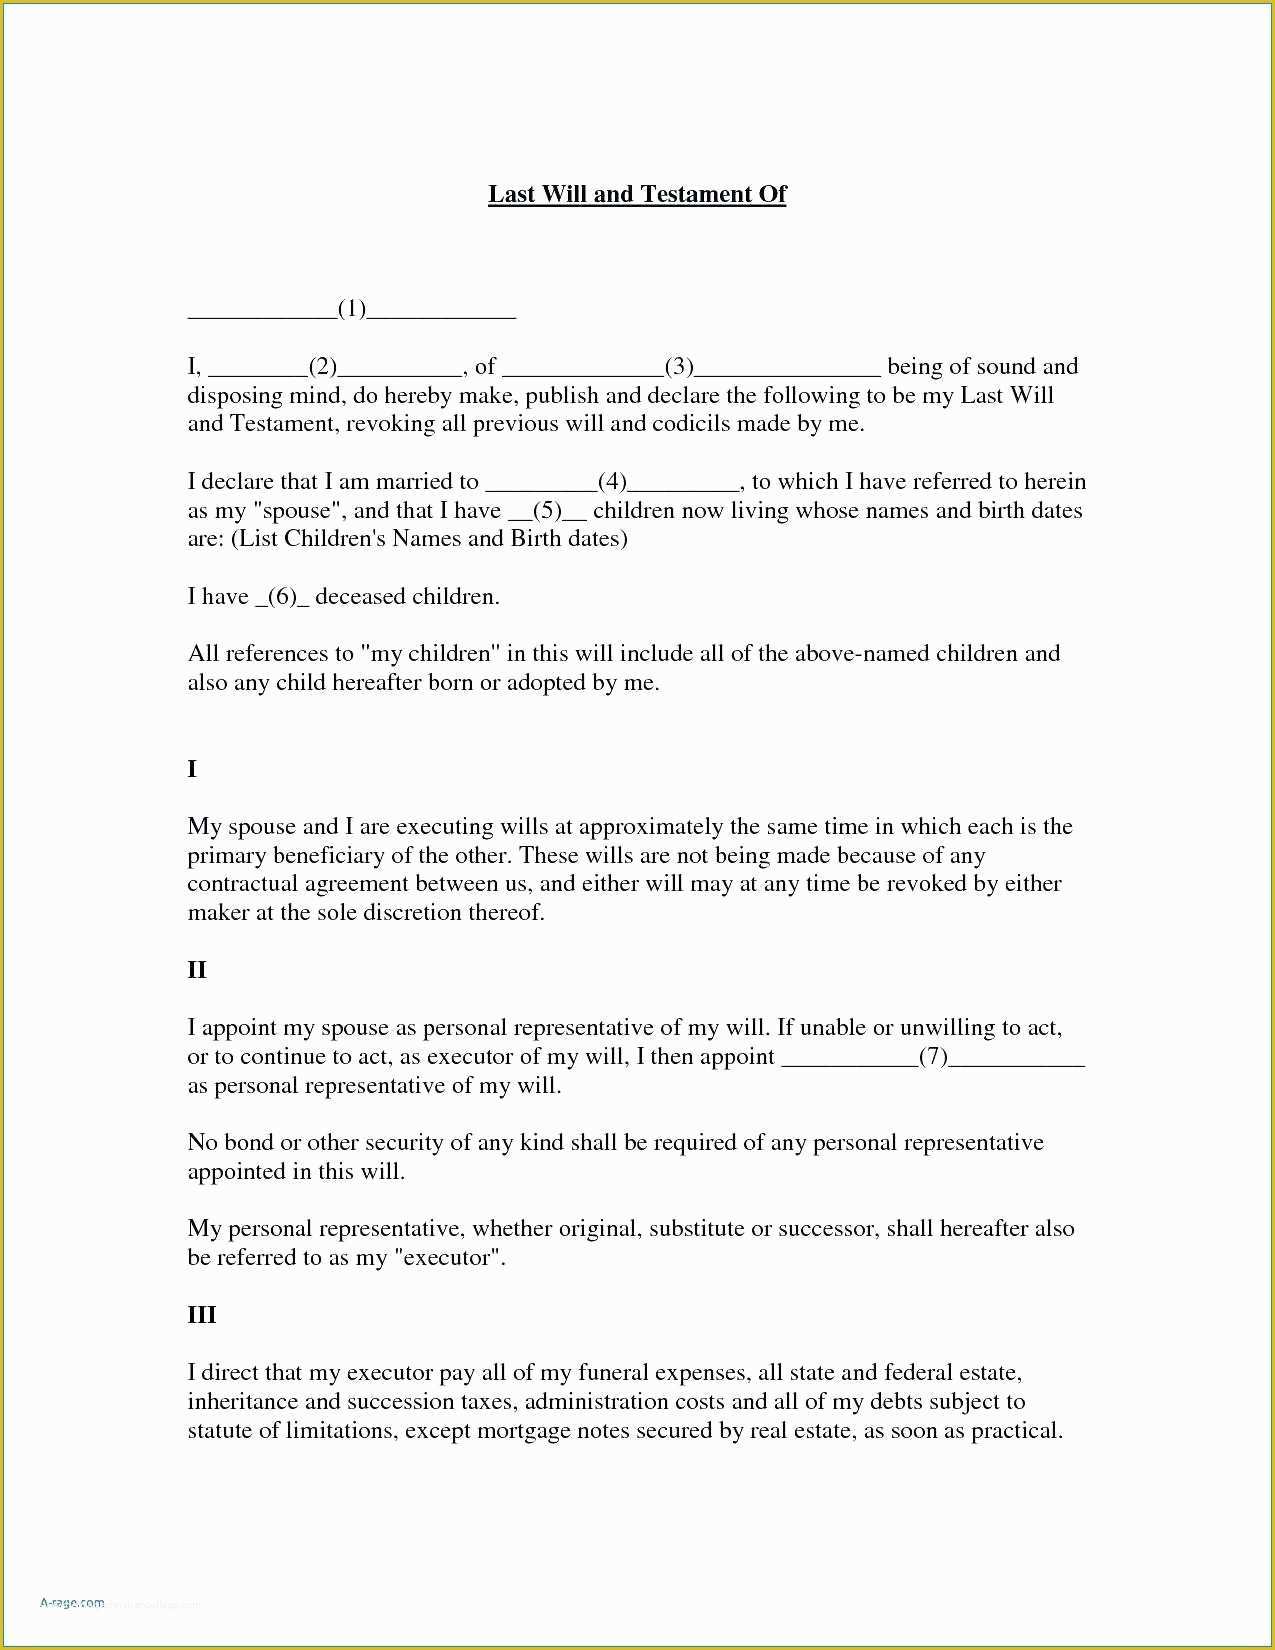 Last Will and Testament Arizona Template Free Of Free Printable Last Will and Testament forms Free